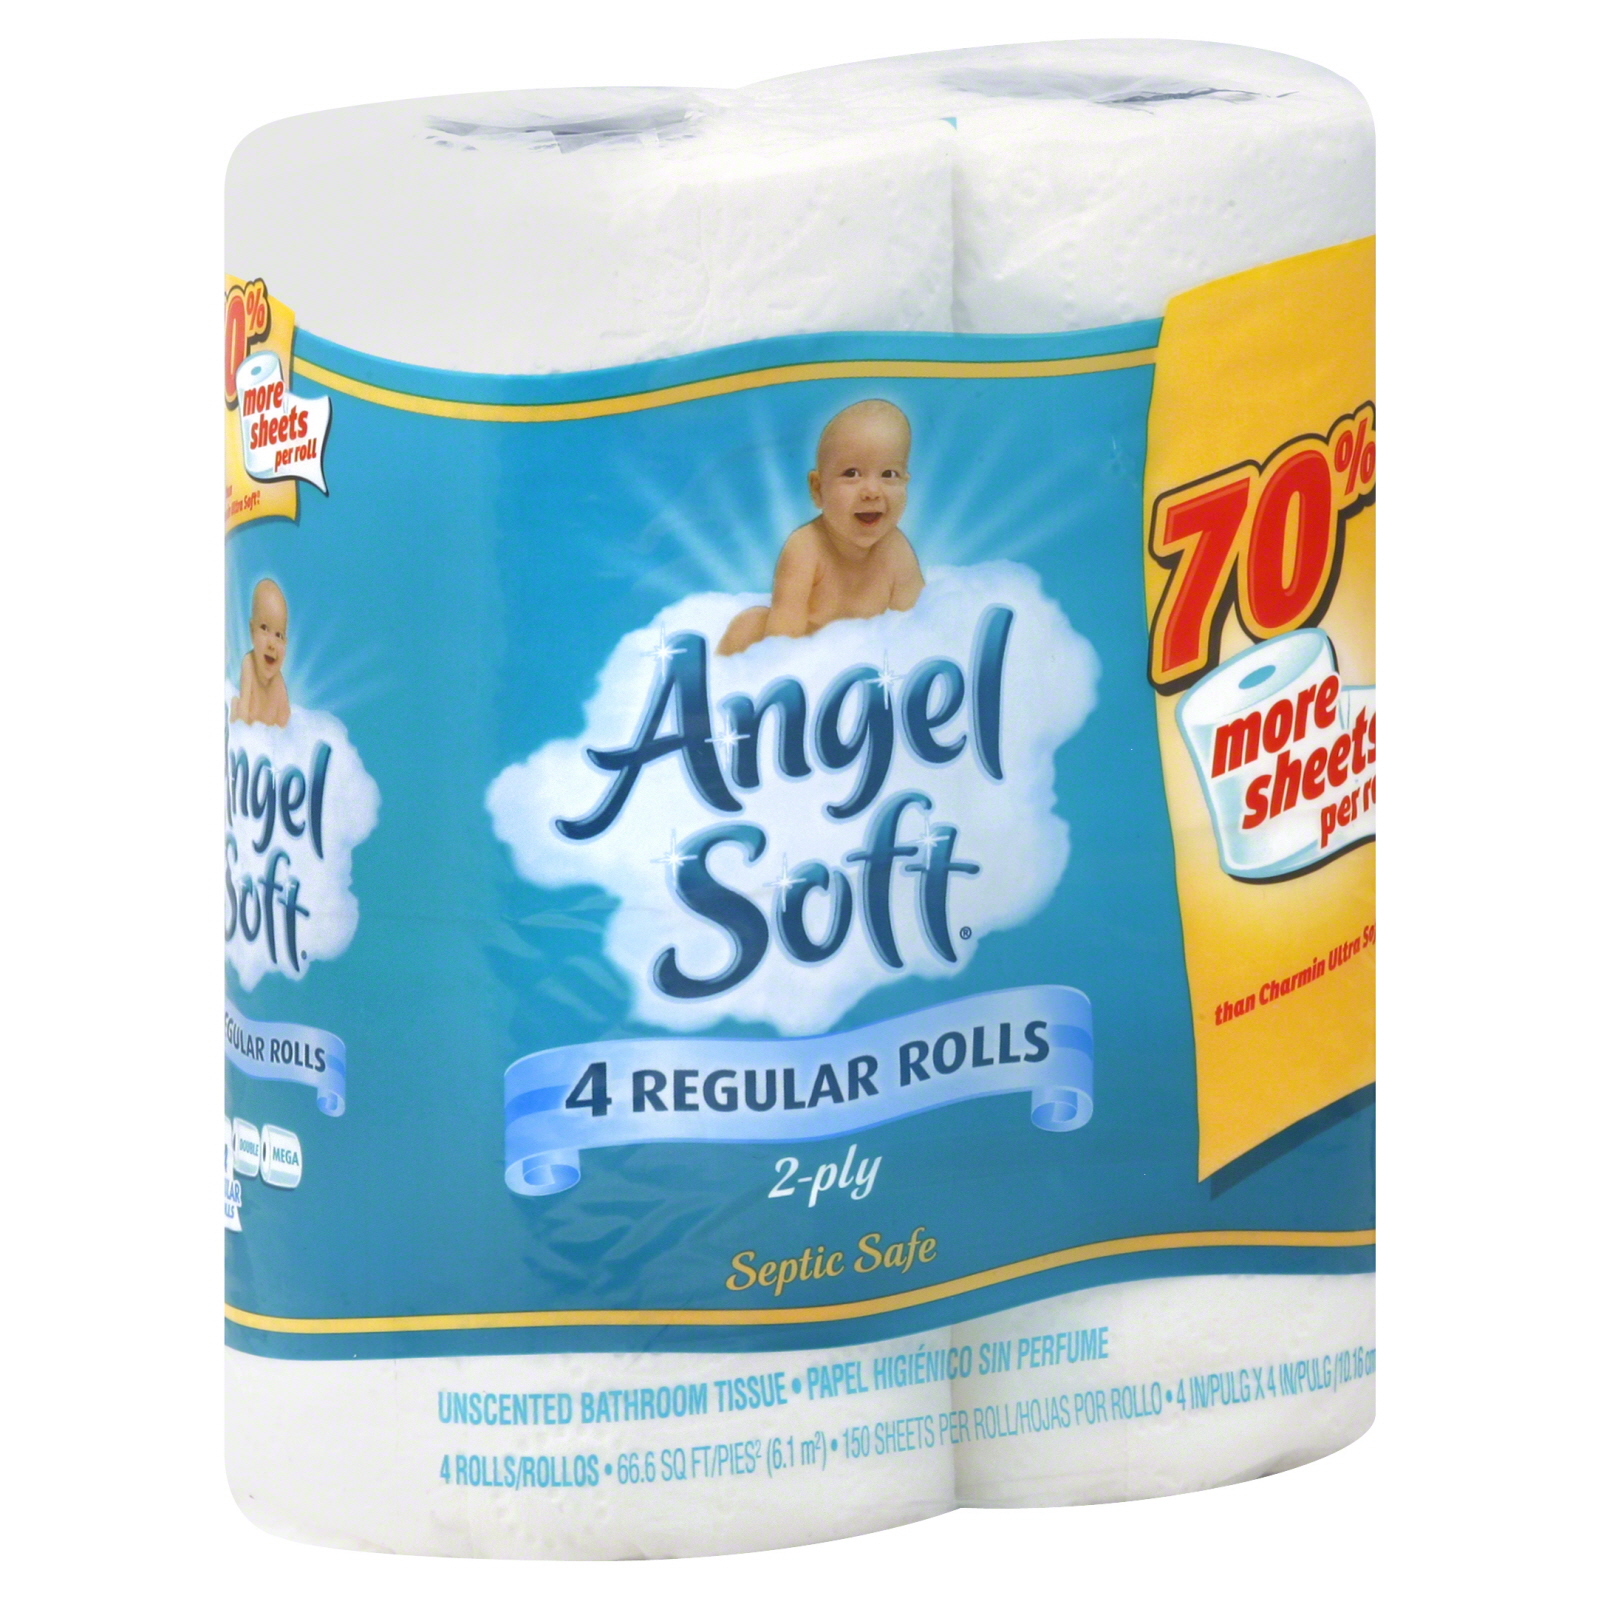 Angel Soft Bathroom Tissue, Regular Rolls, Unscented, 2-Ply, 4 rolls